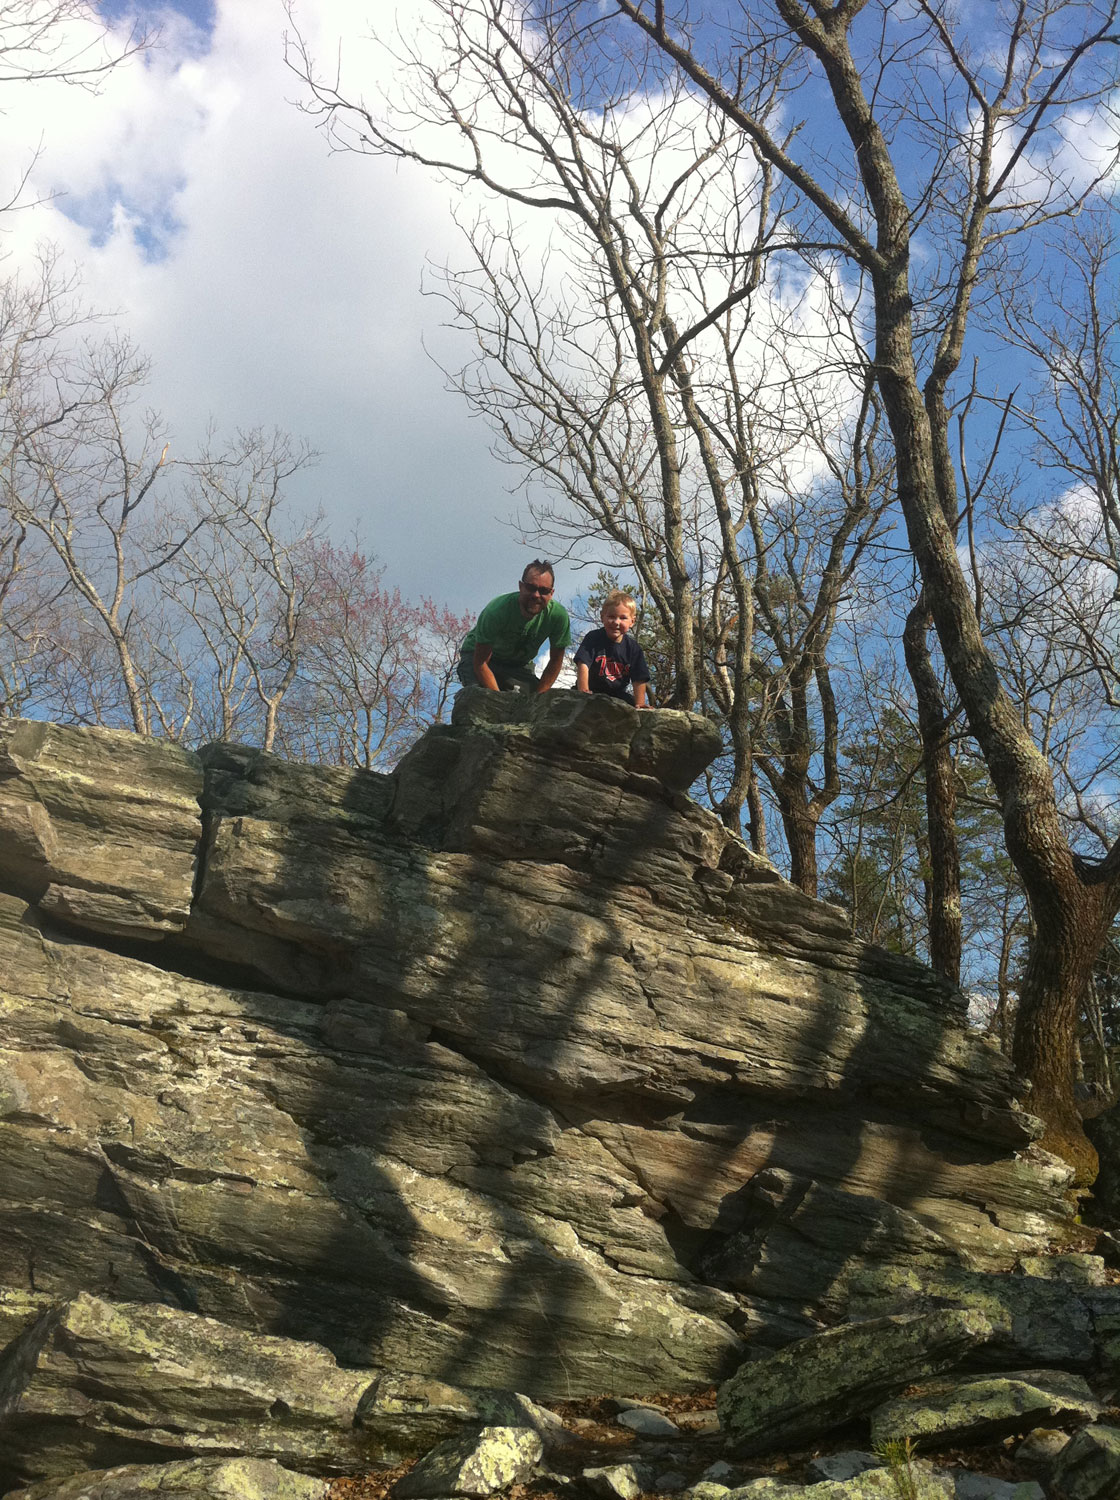 Rock climbing buddies